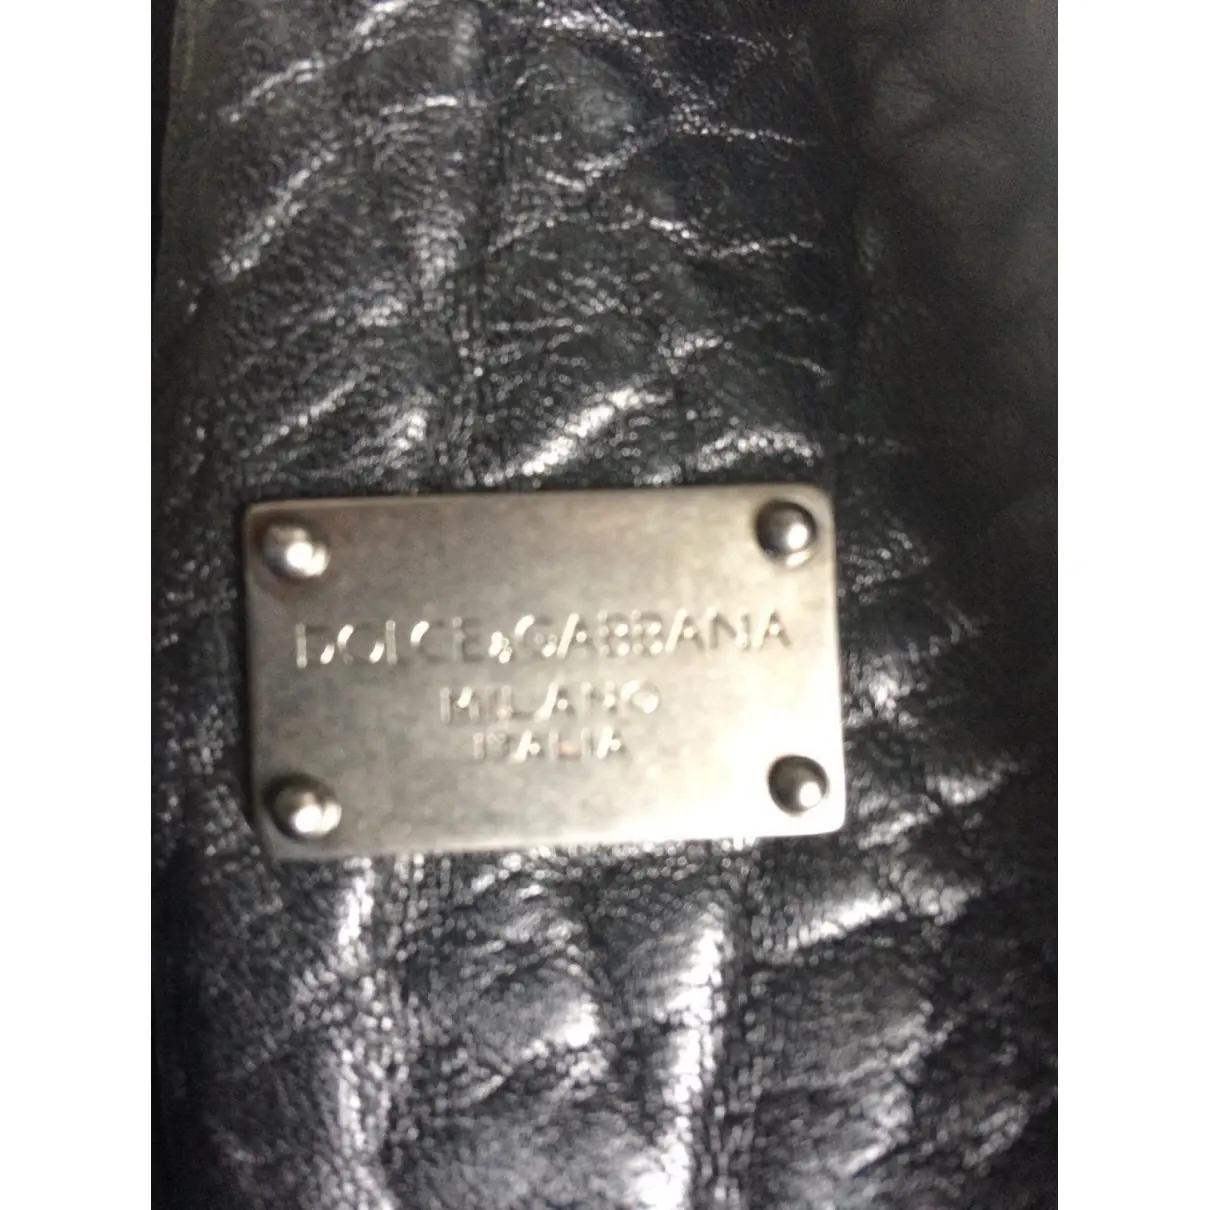 Buy Dolce & Gabbana Leather crossbody bag online